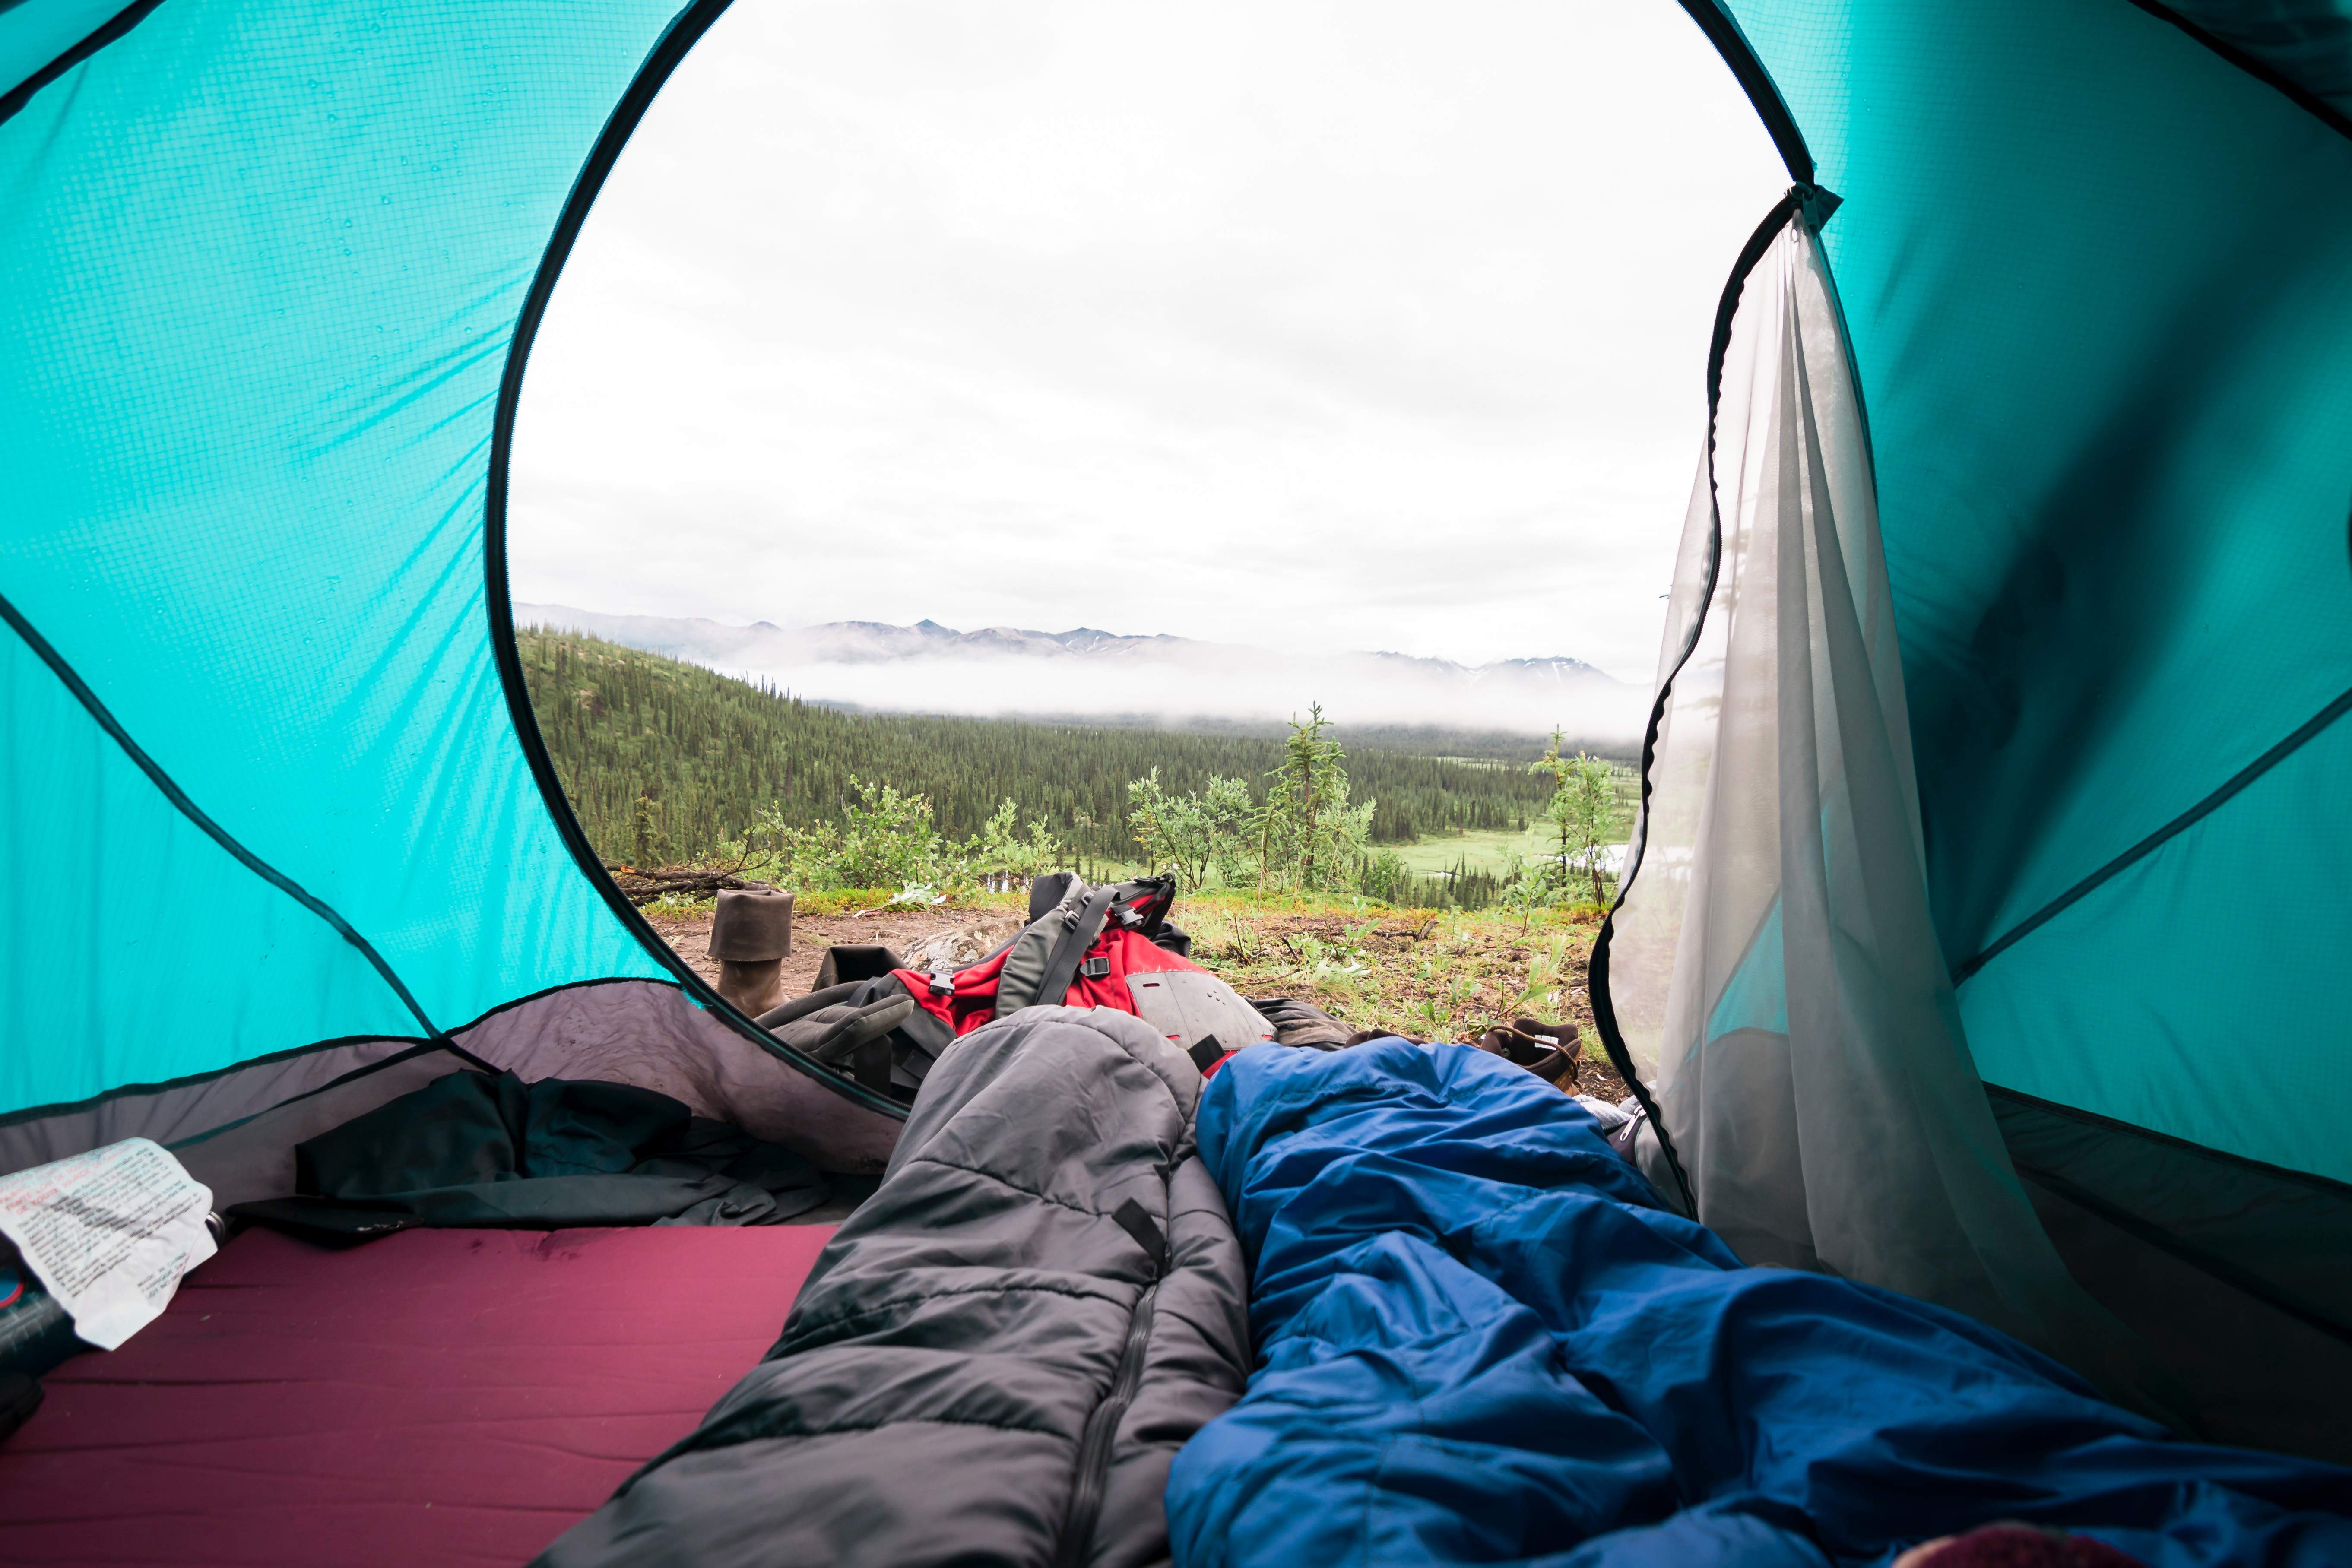 Rent Camping Gear Denver